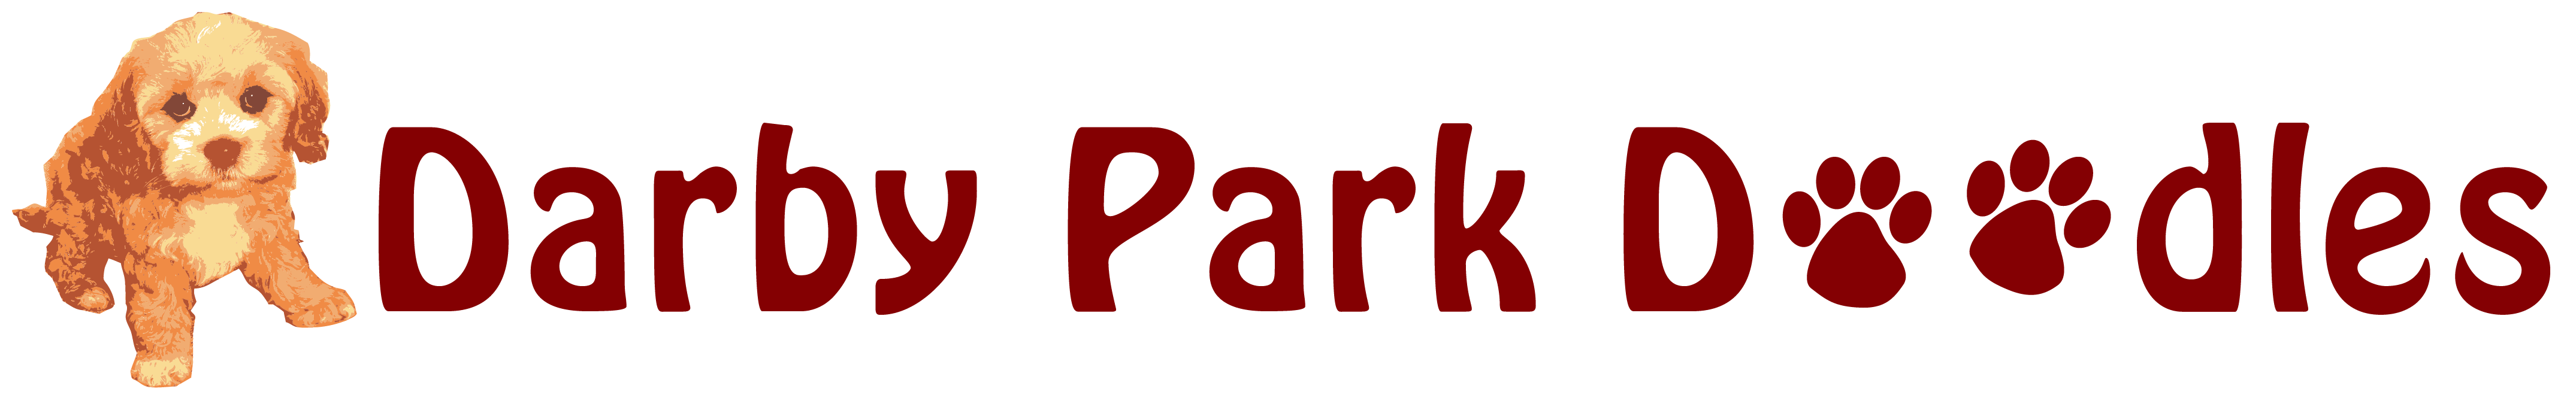 Darby Park Doodles Logo